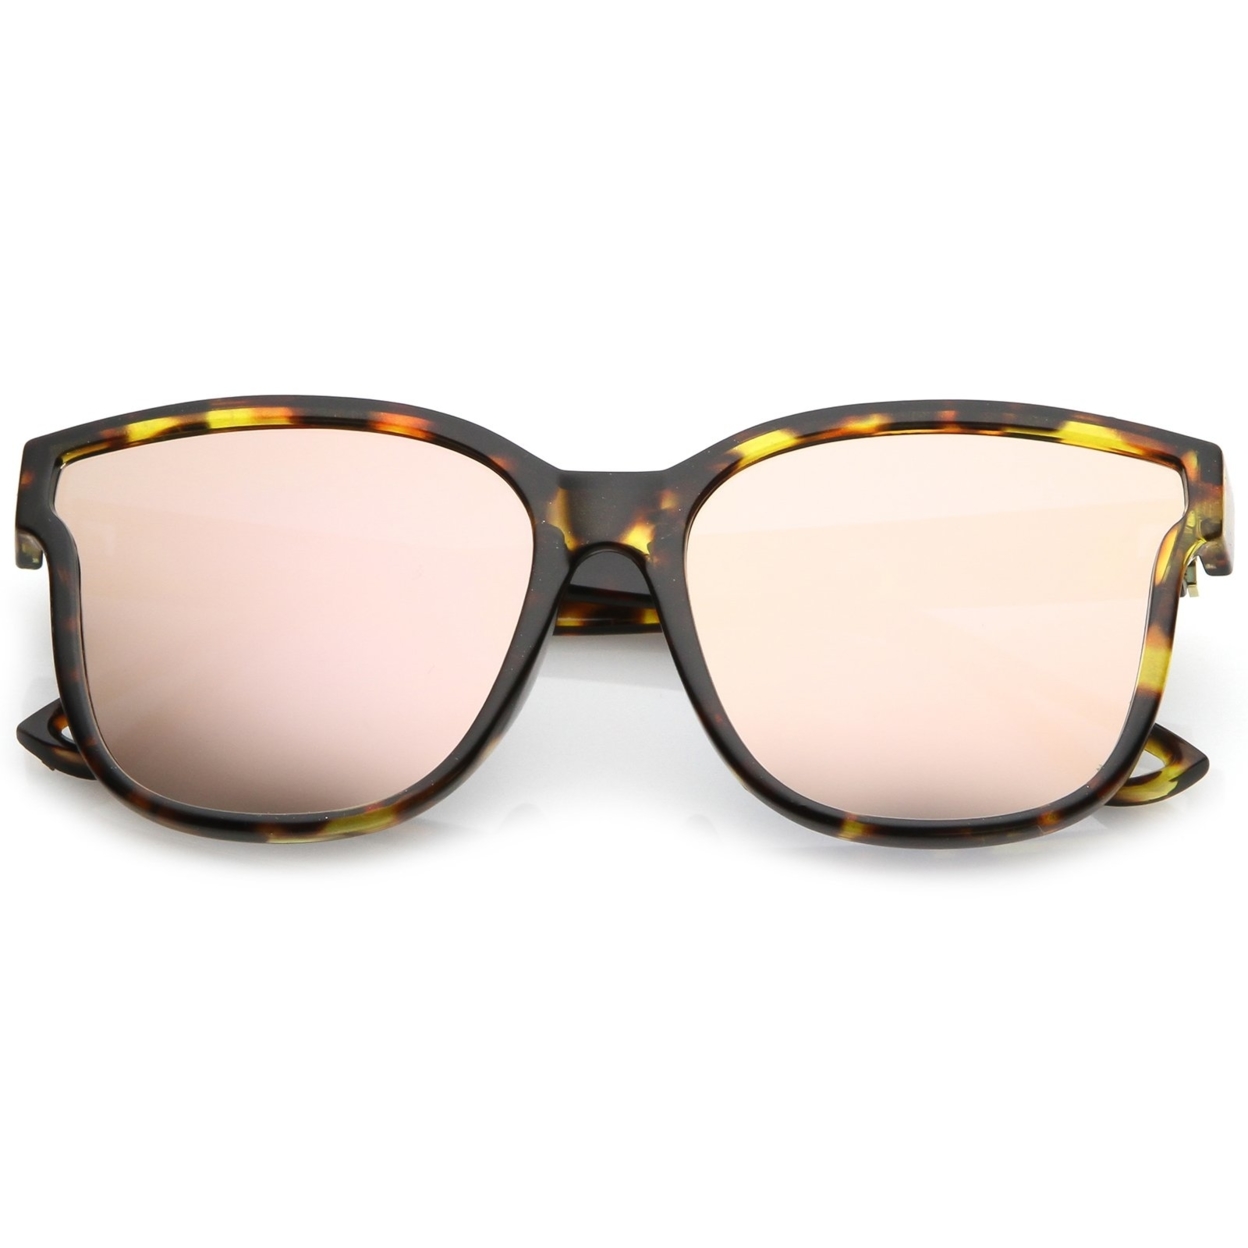 Women's Horn Rim Metal Accent Mirrored Square Flat Lens Cat Eye Sunglasses 55mm - Matte Black / Red Mirror